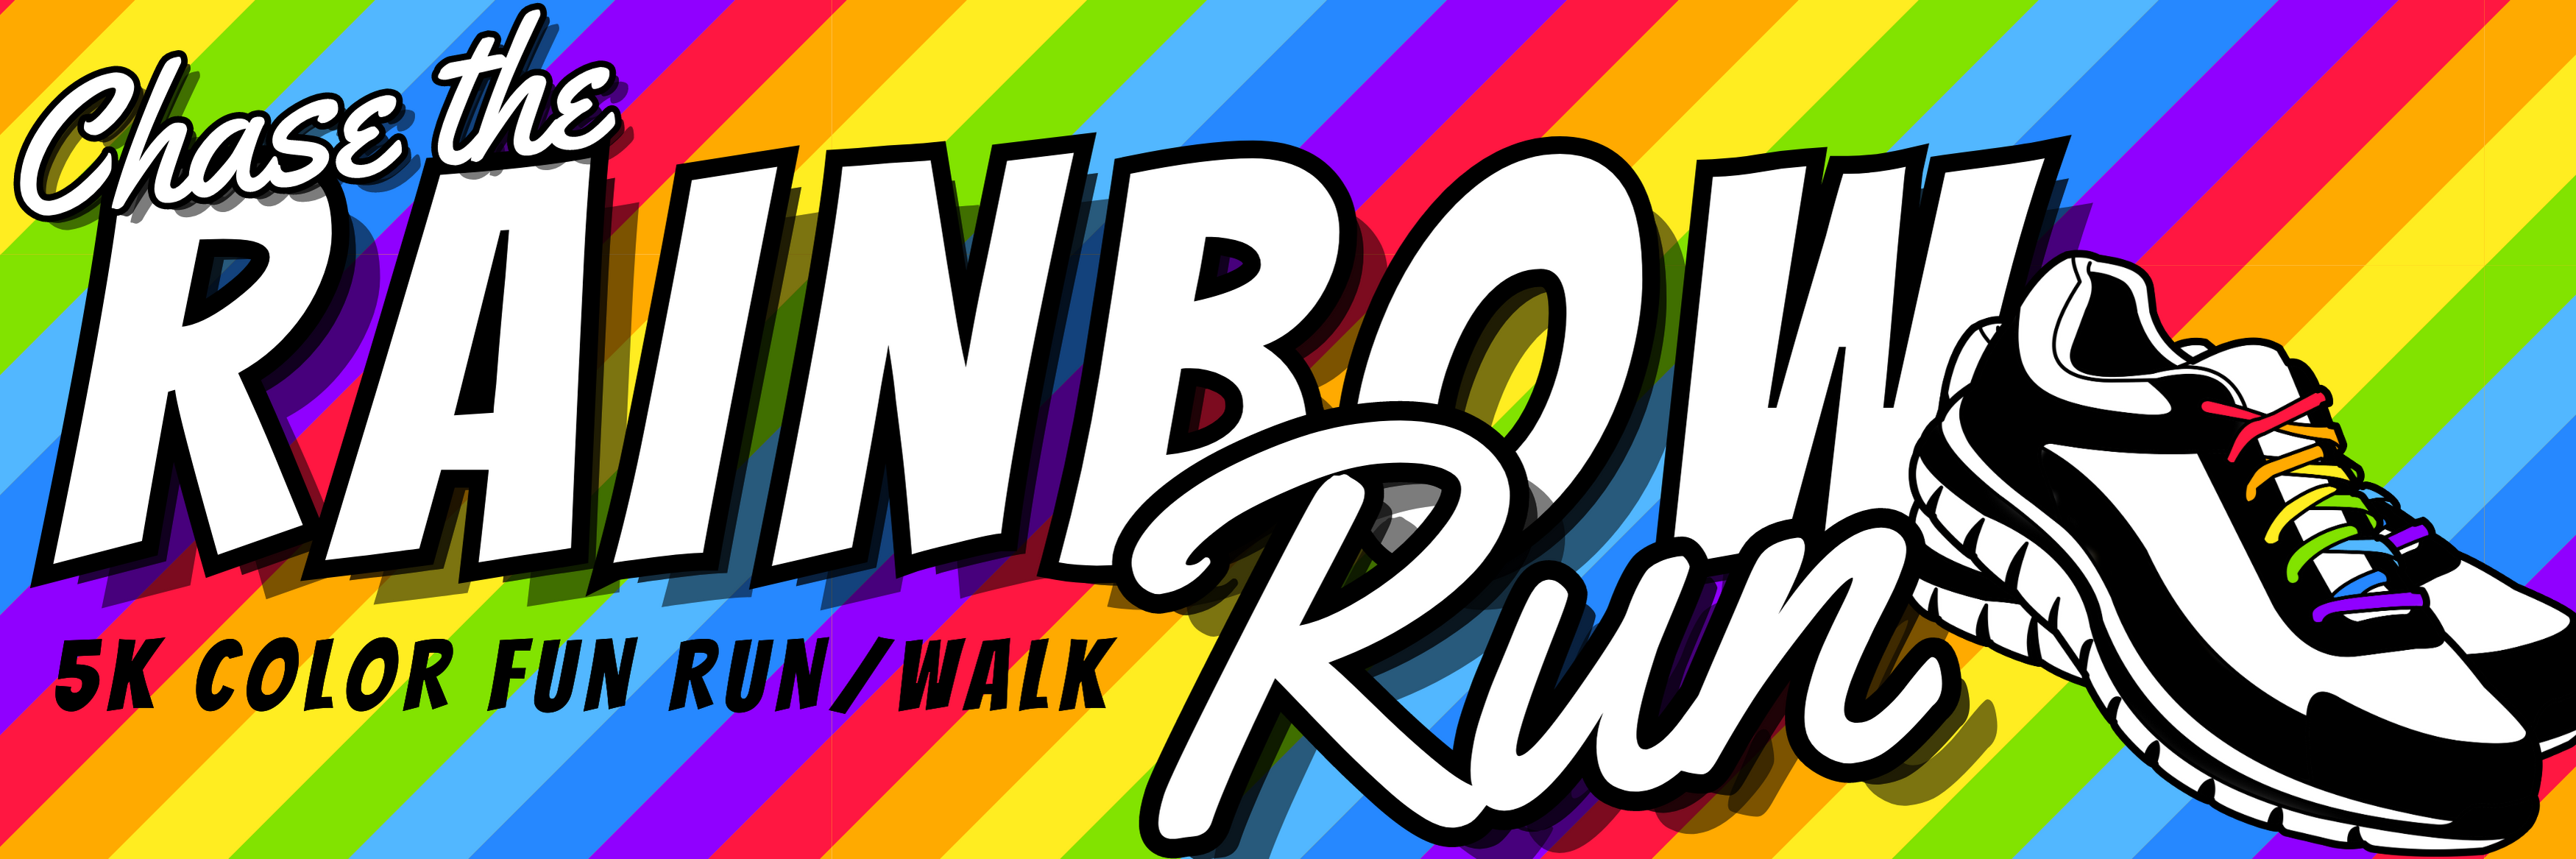 Chase the Rainbow Run 5K logo on RaceRaves